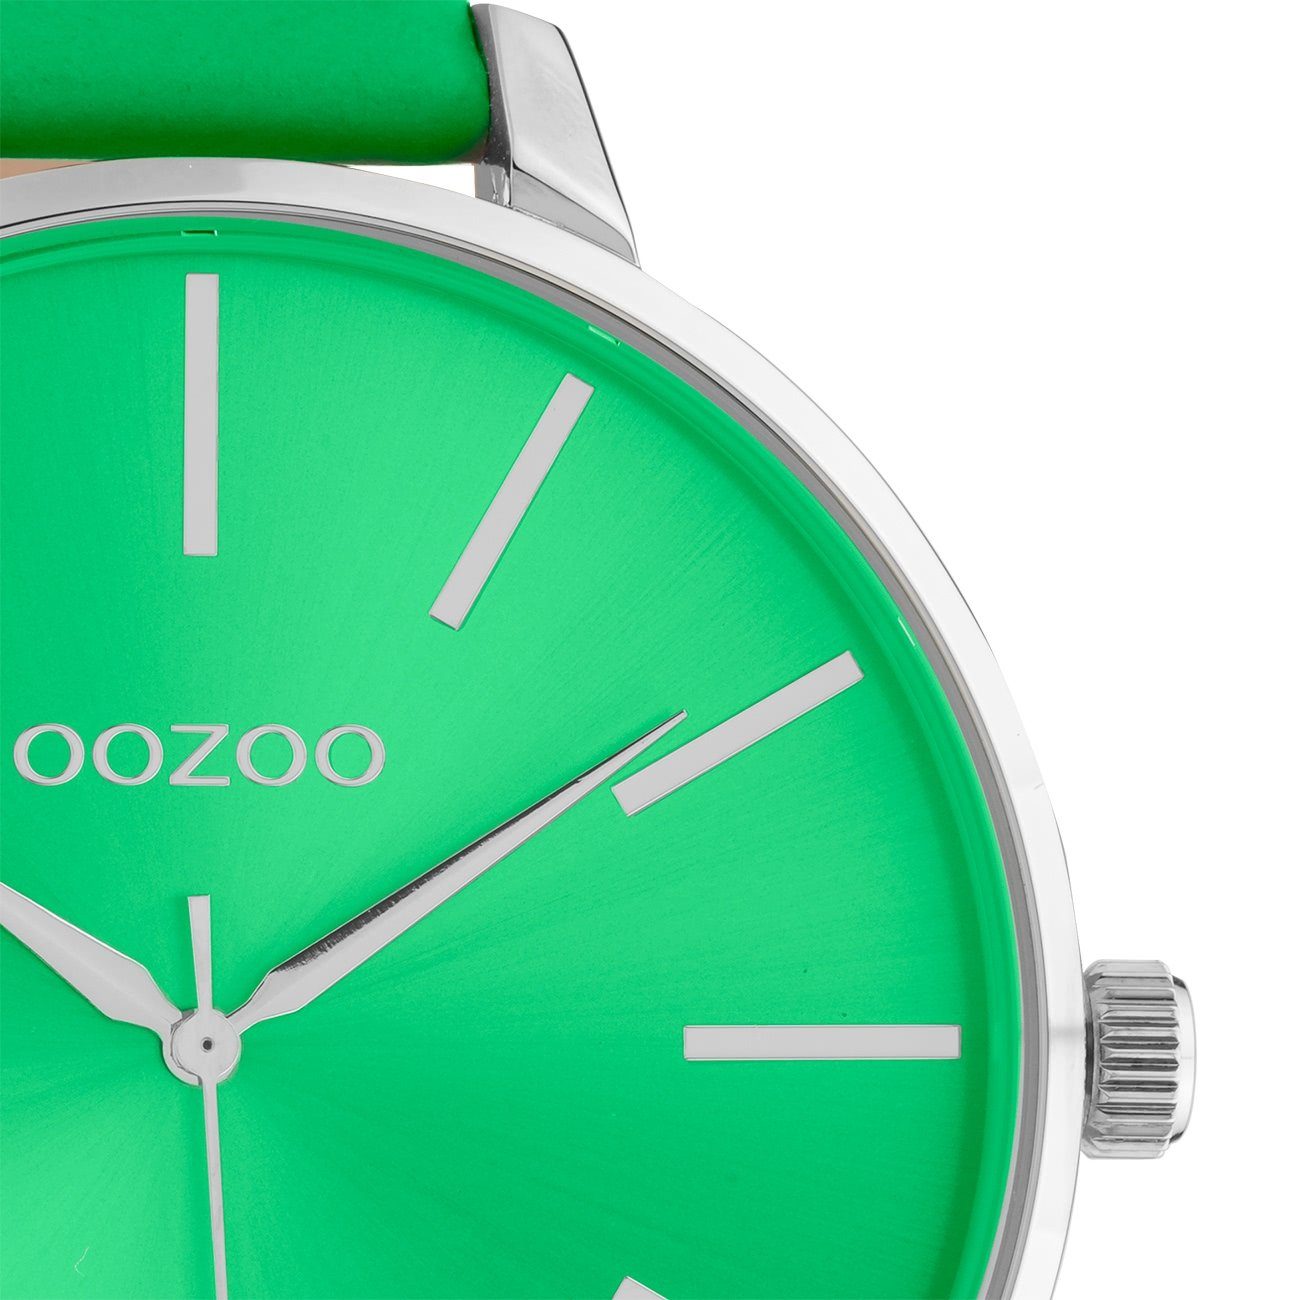 Timepieces, Oozoo 48mm) extra (ca. Armbanduhr Quarzuhr Fashion-Style OOZOO groß Lederarmband, rund, Damen Damenuhr